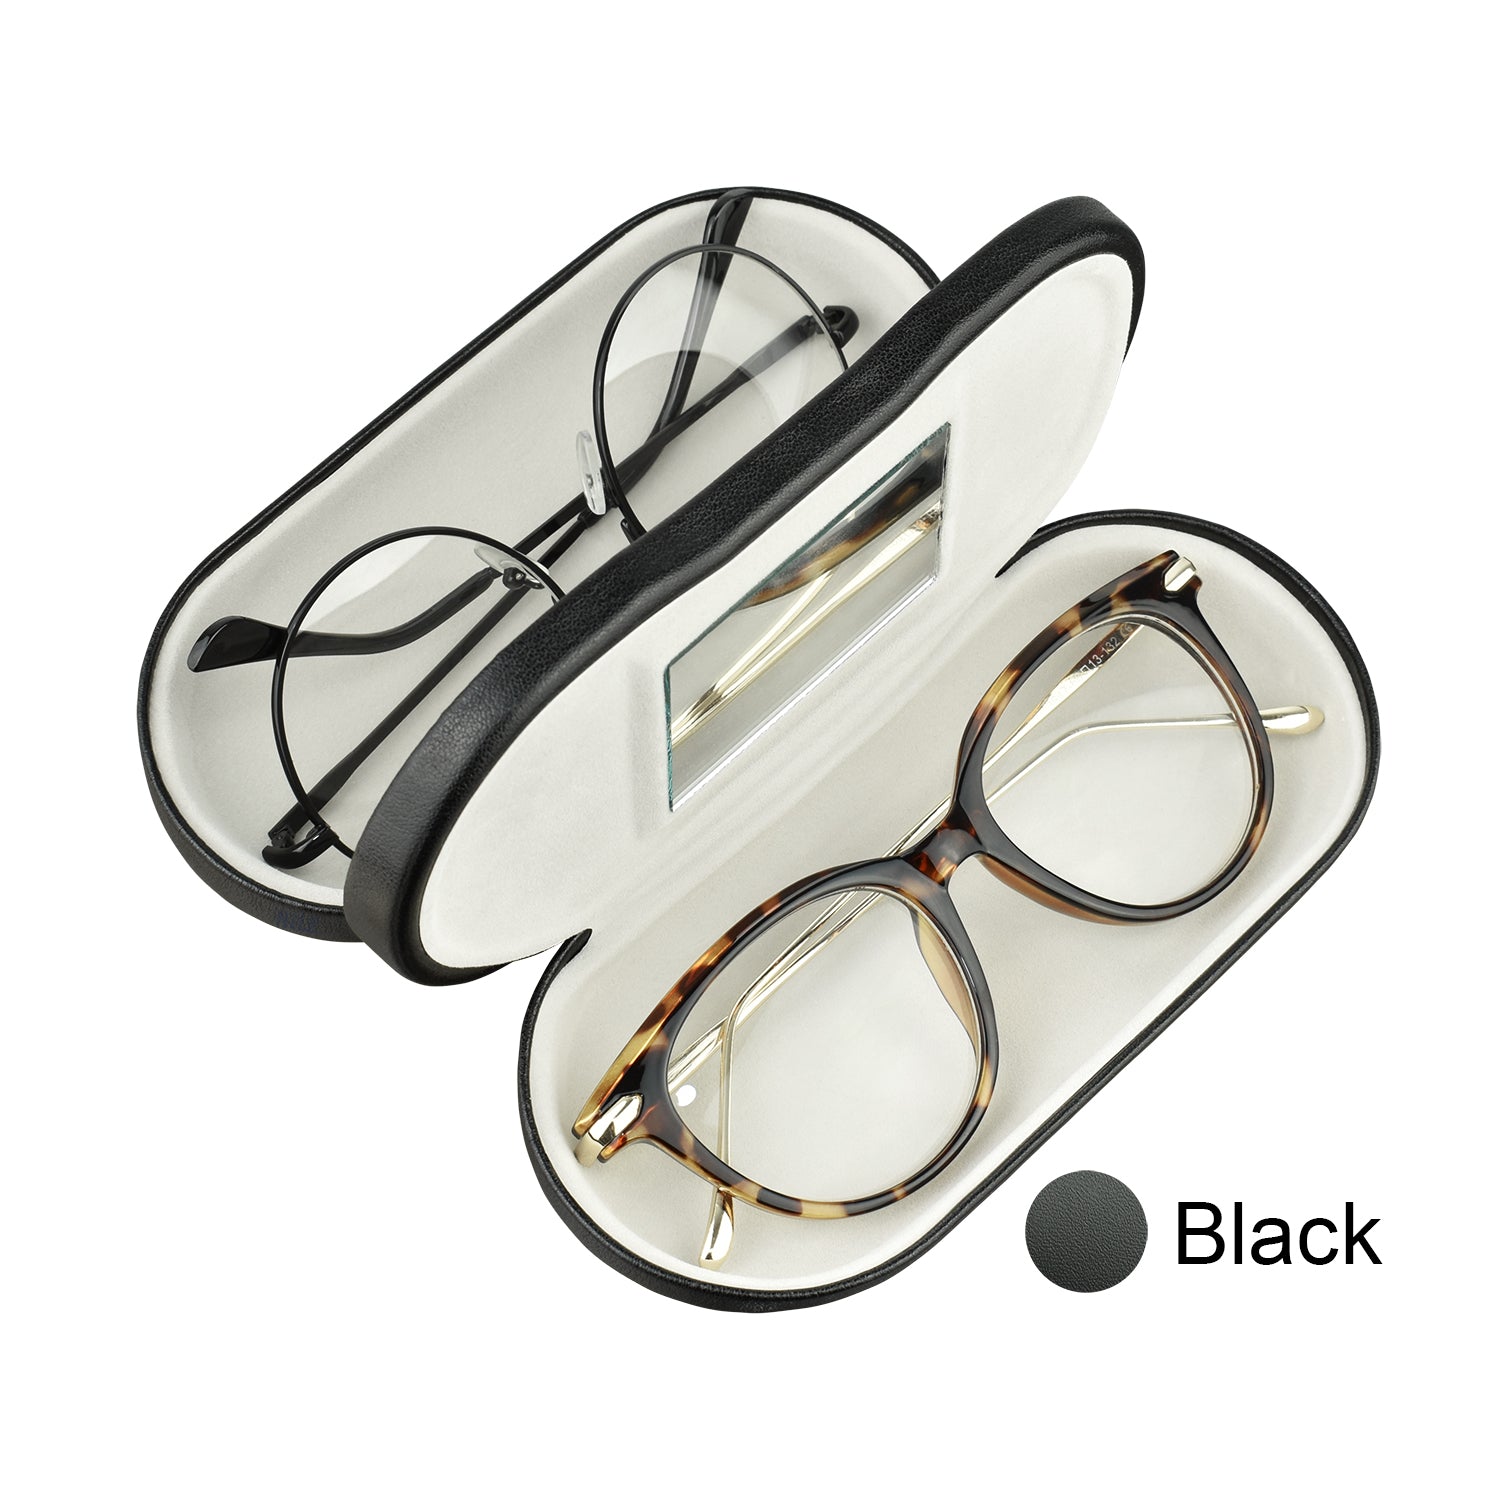 Dual portable eyeglasses case.